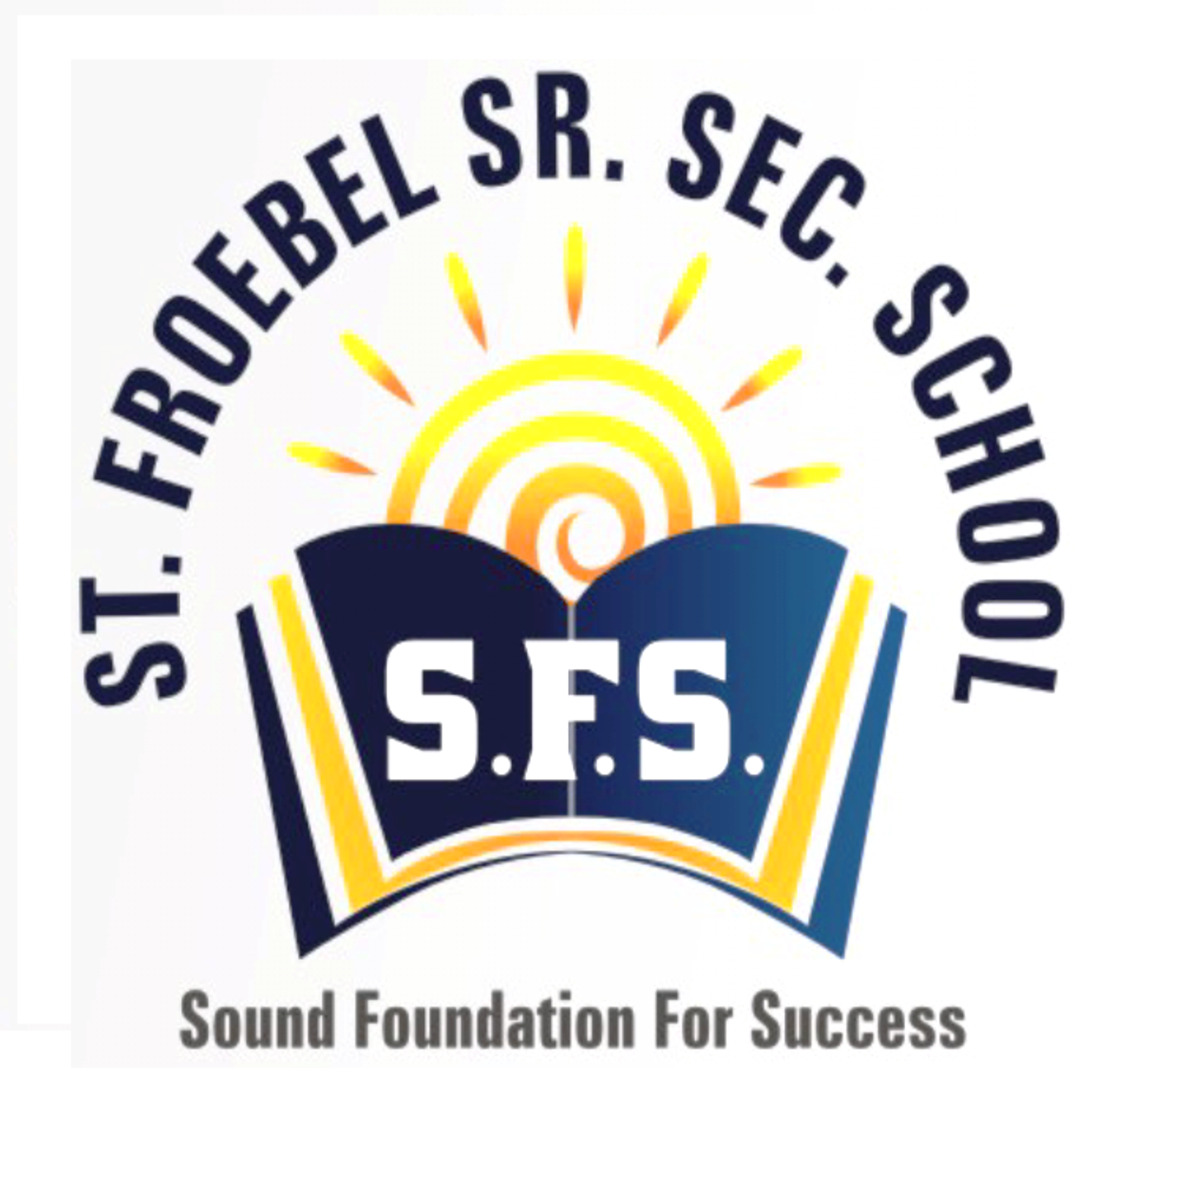 St. Froebel Sr Sec SchoolEducation and LearningPlay Schools - CrecheCentral DelhiOther